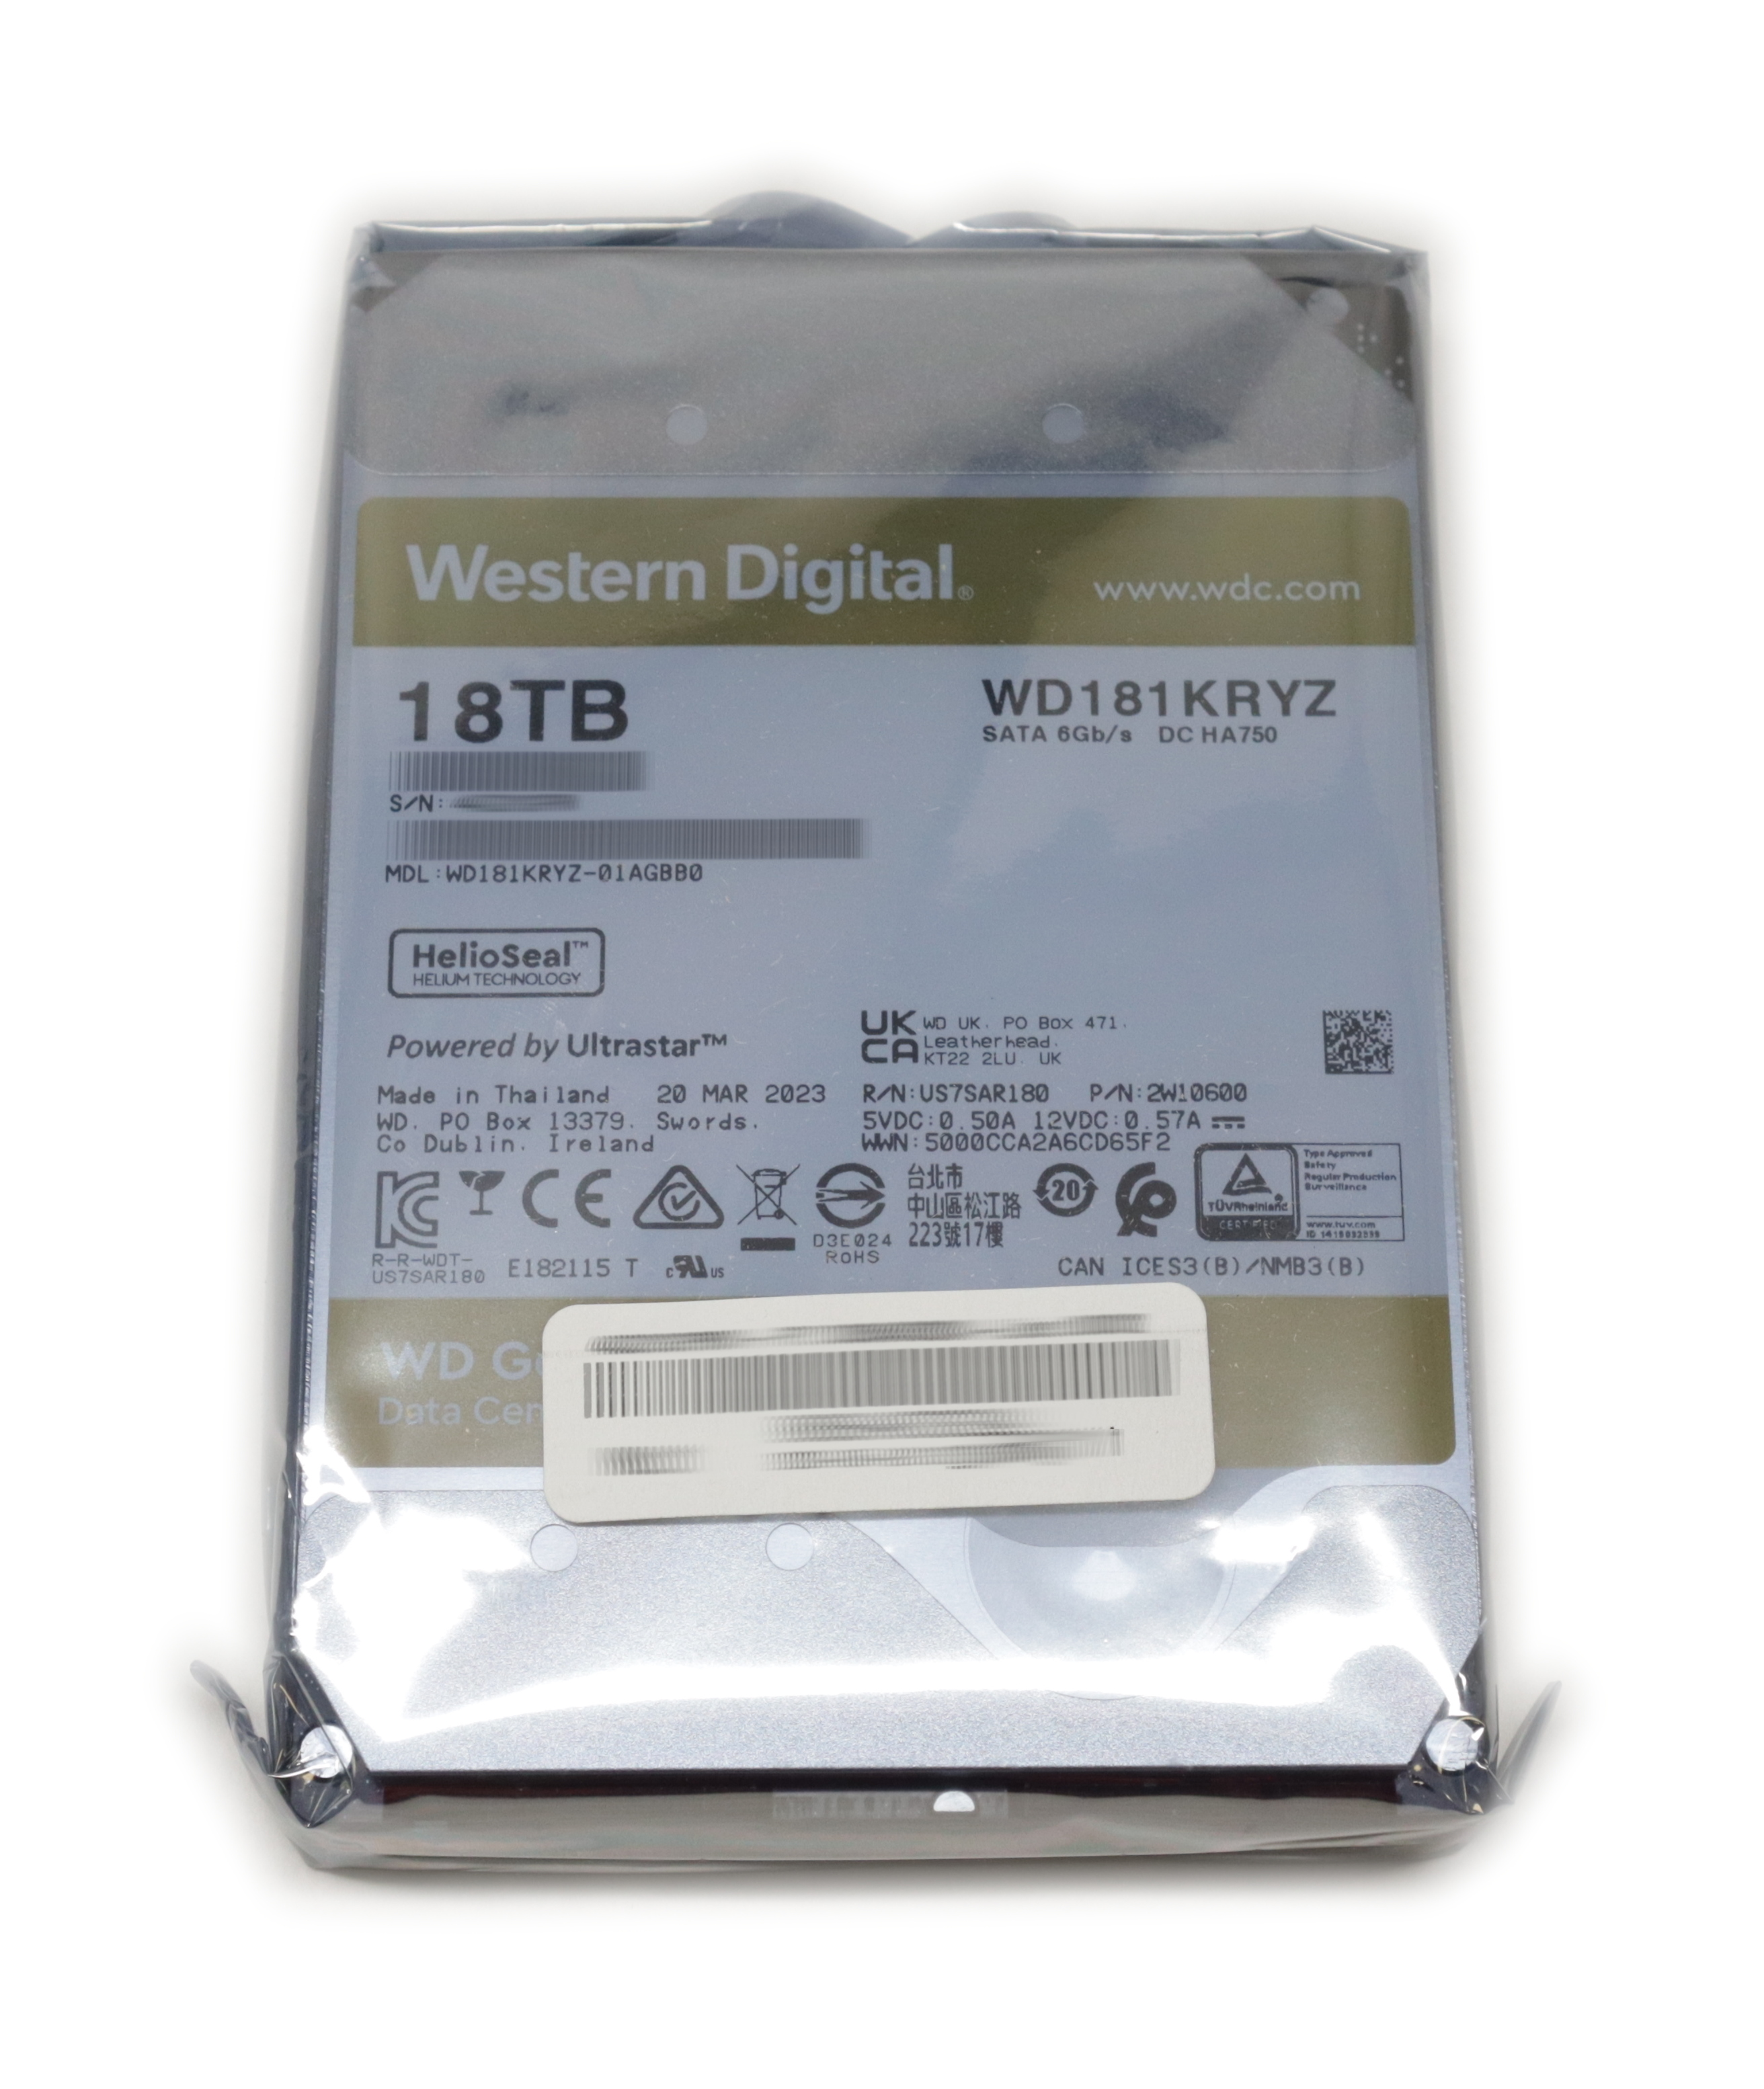 WD Gold 18TB WD181KRYZ-01AGBB0 SATA 6Gb/s 7200 RPM 3.5" 2W10600 - Click Image to Close